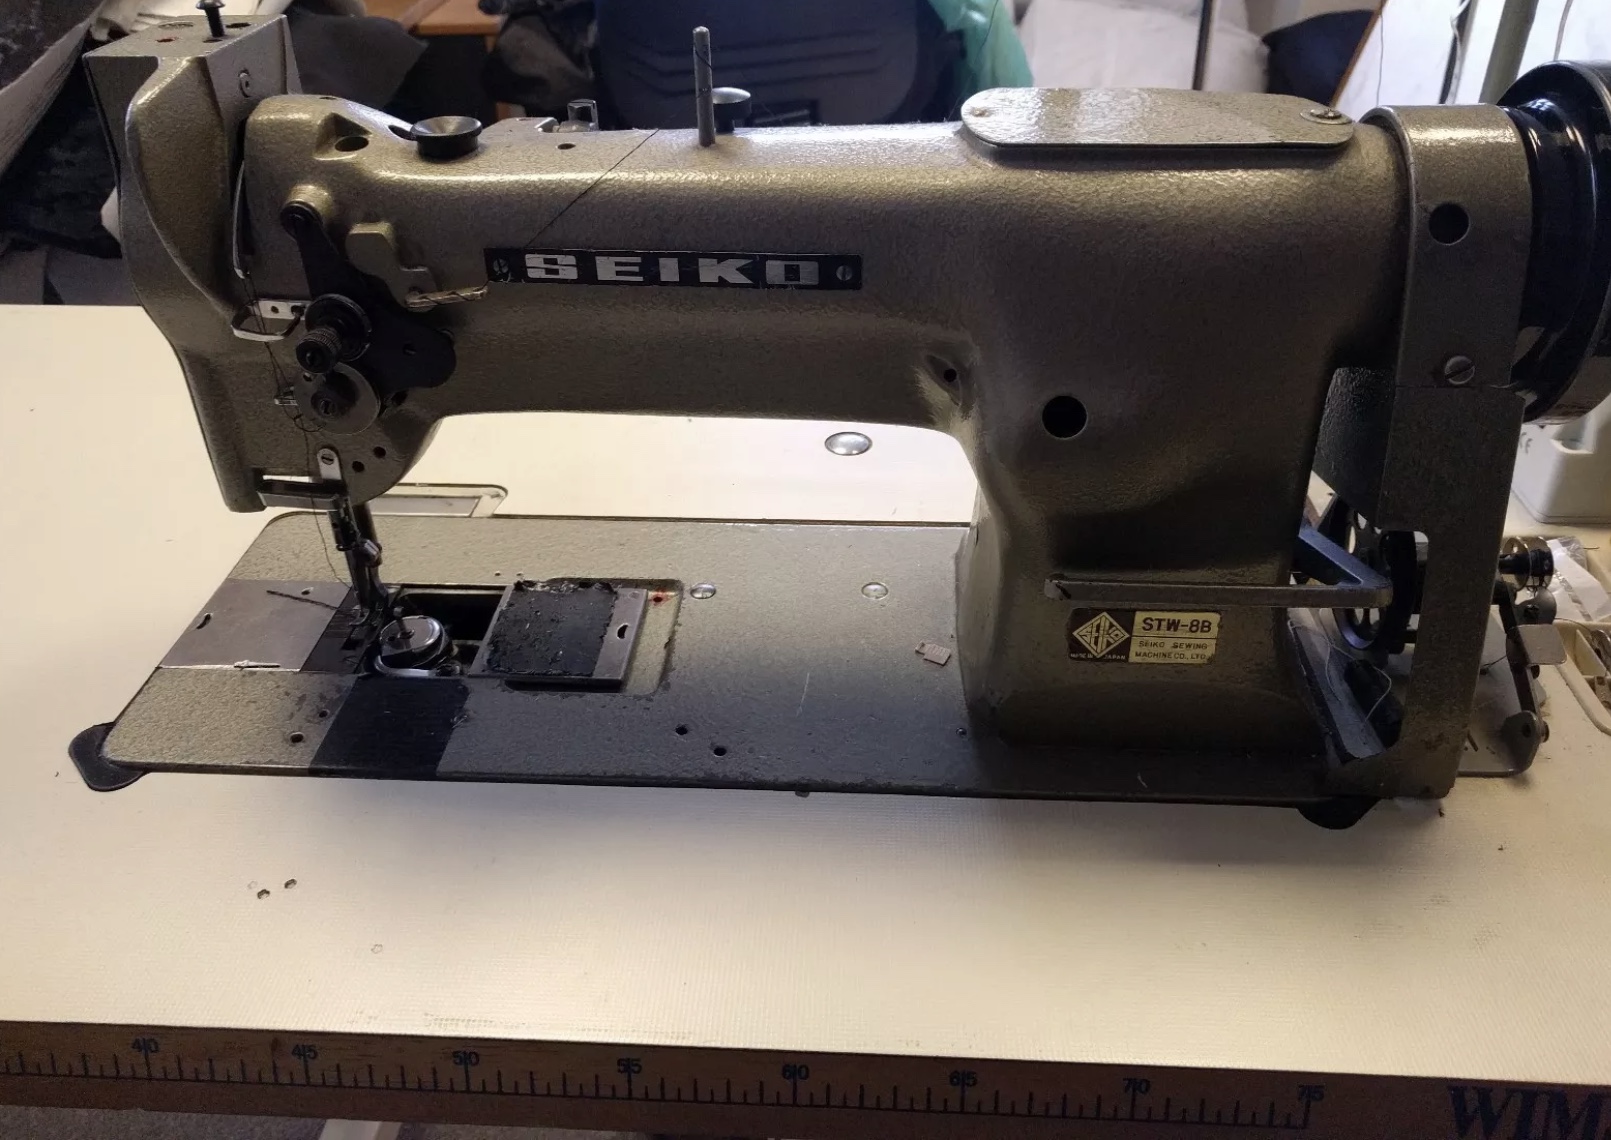 Seiko STW-8B - Leather Sewing Machines 